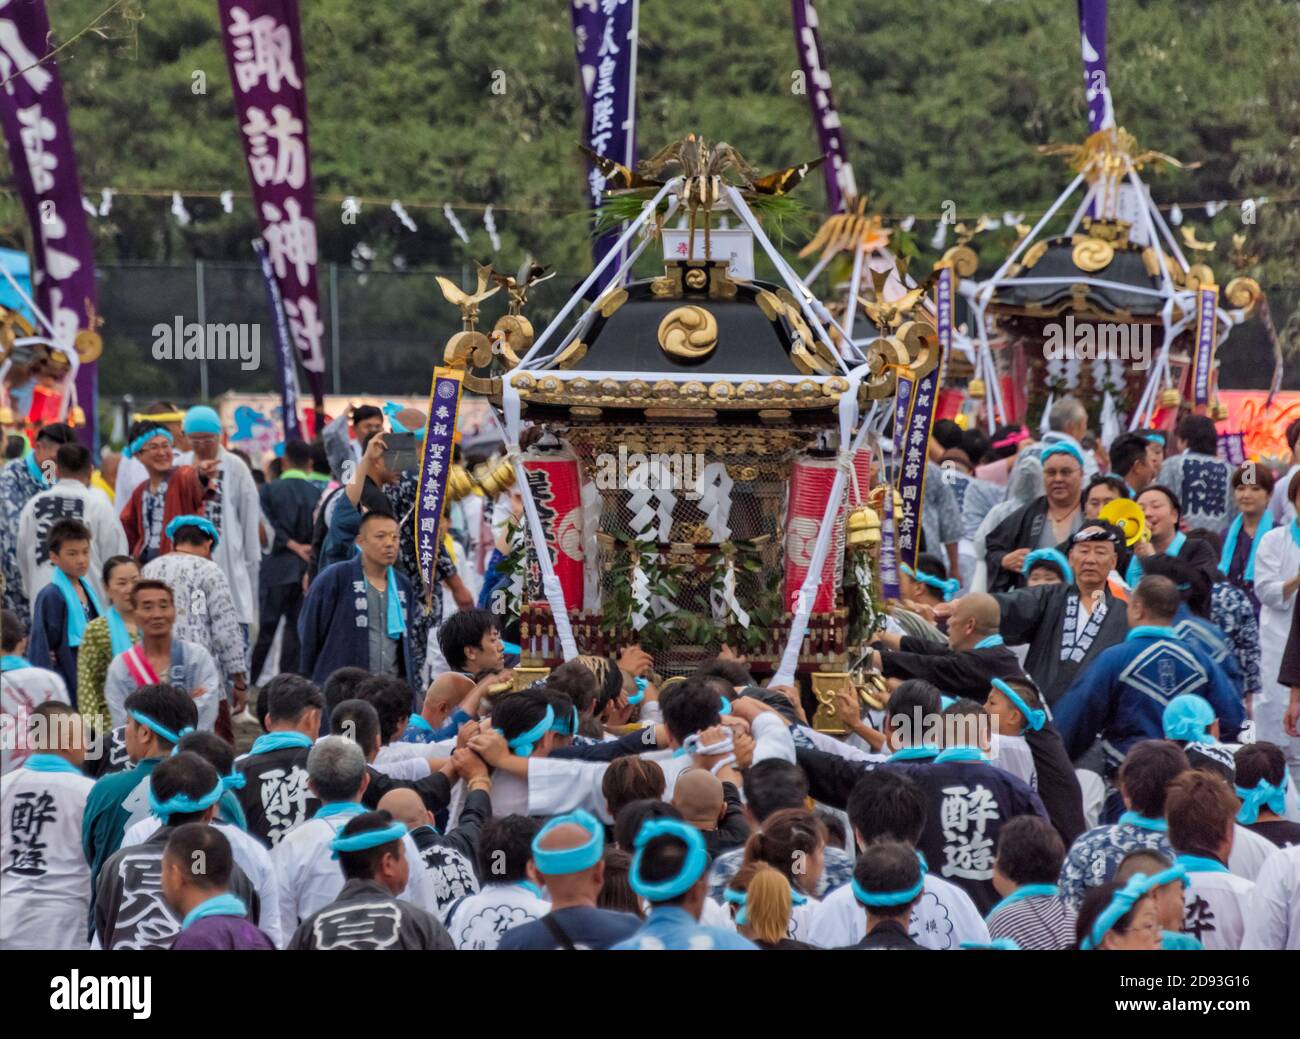 Parade carrying portable Mikoshi shrines celebrating Hamaori Festival, Chigasaki, Kanagawa Prefecture, Japan Stock Photo